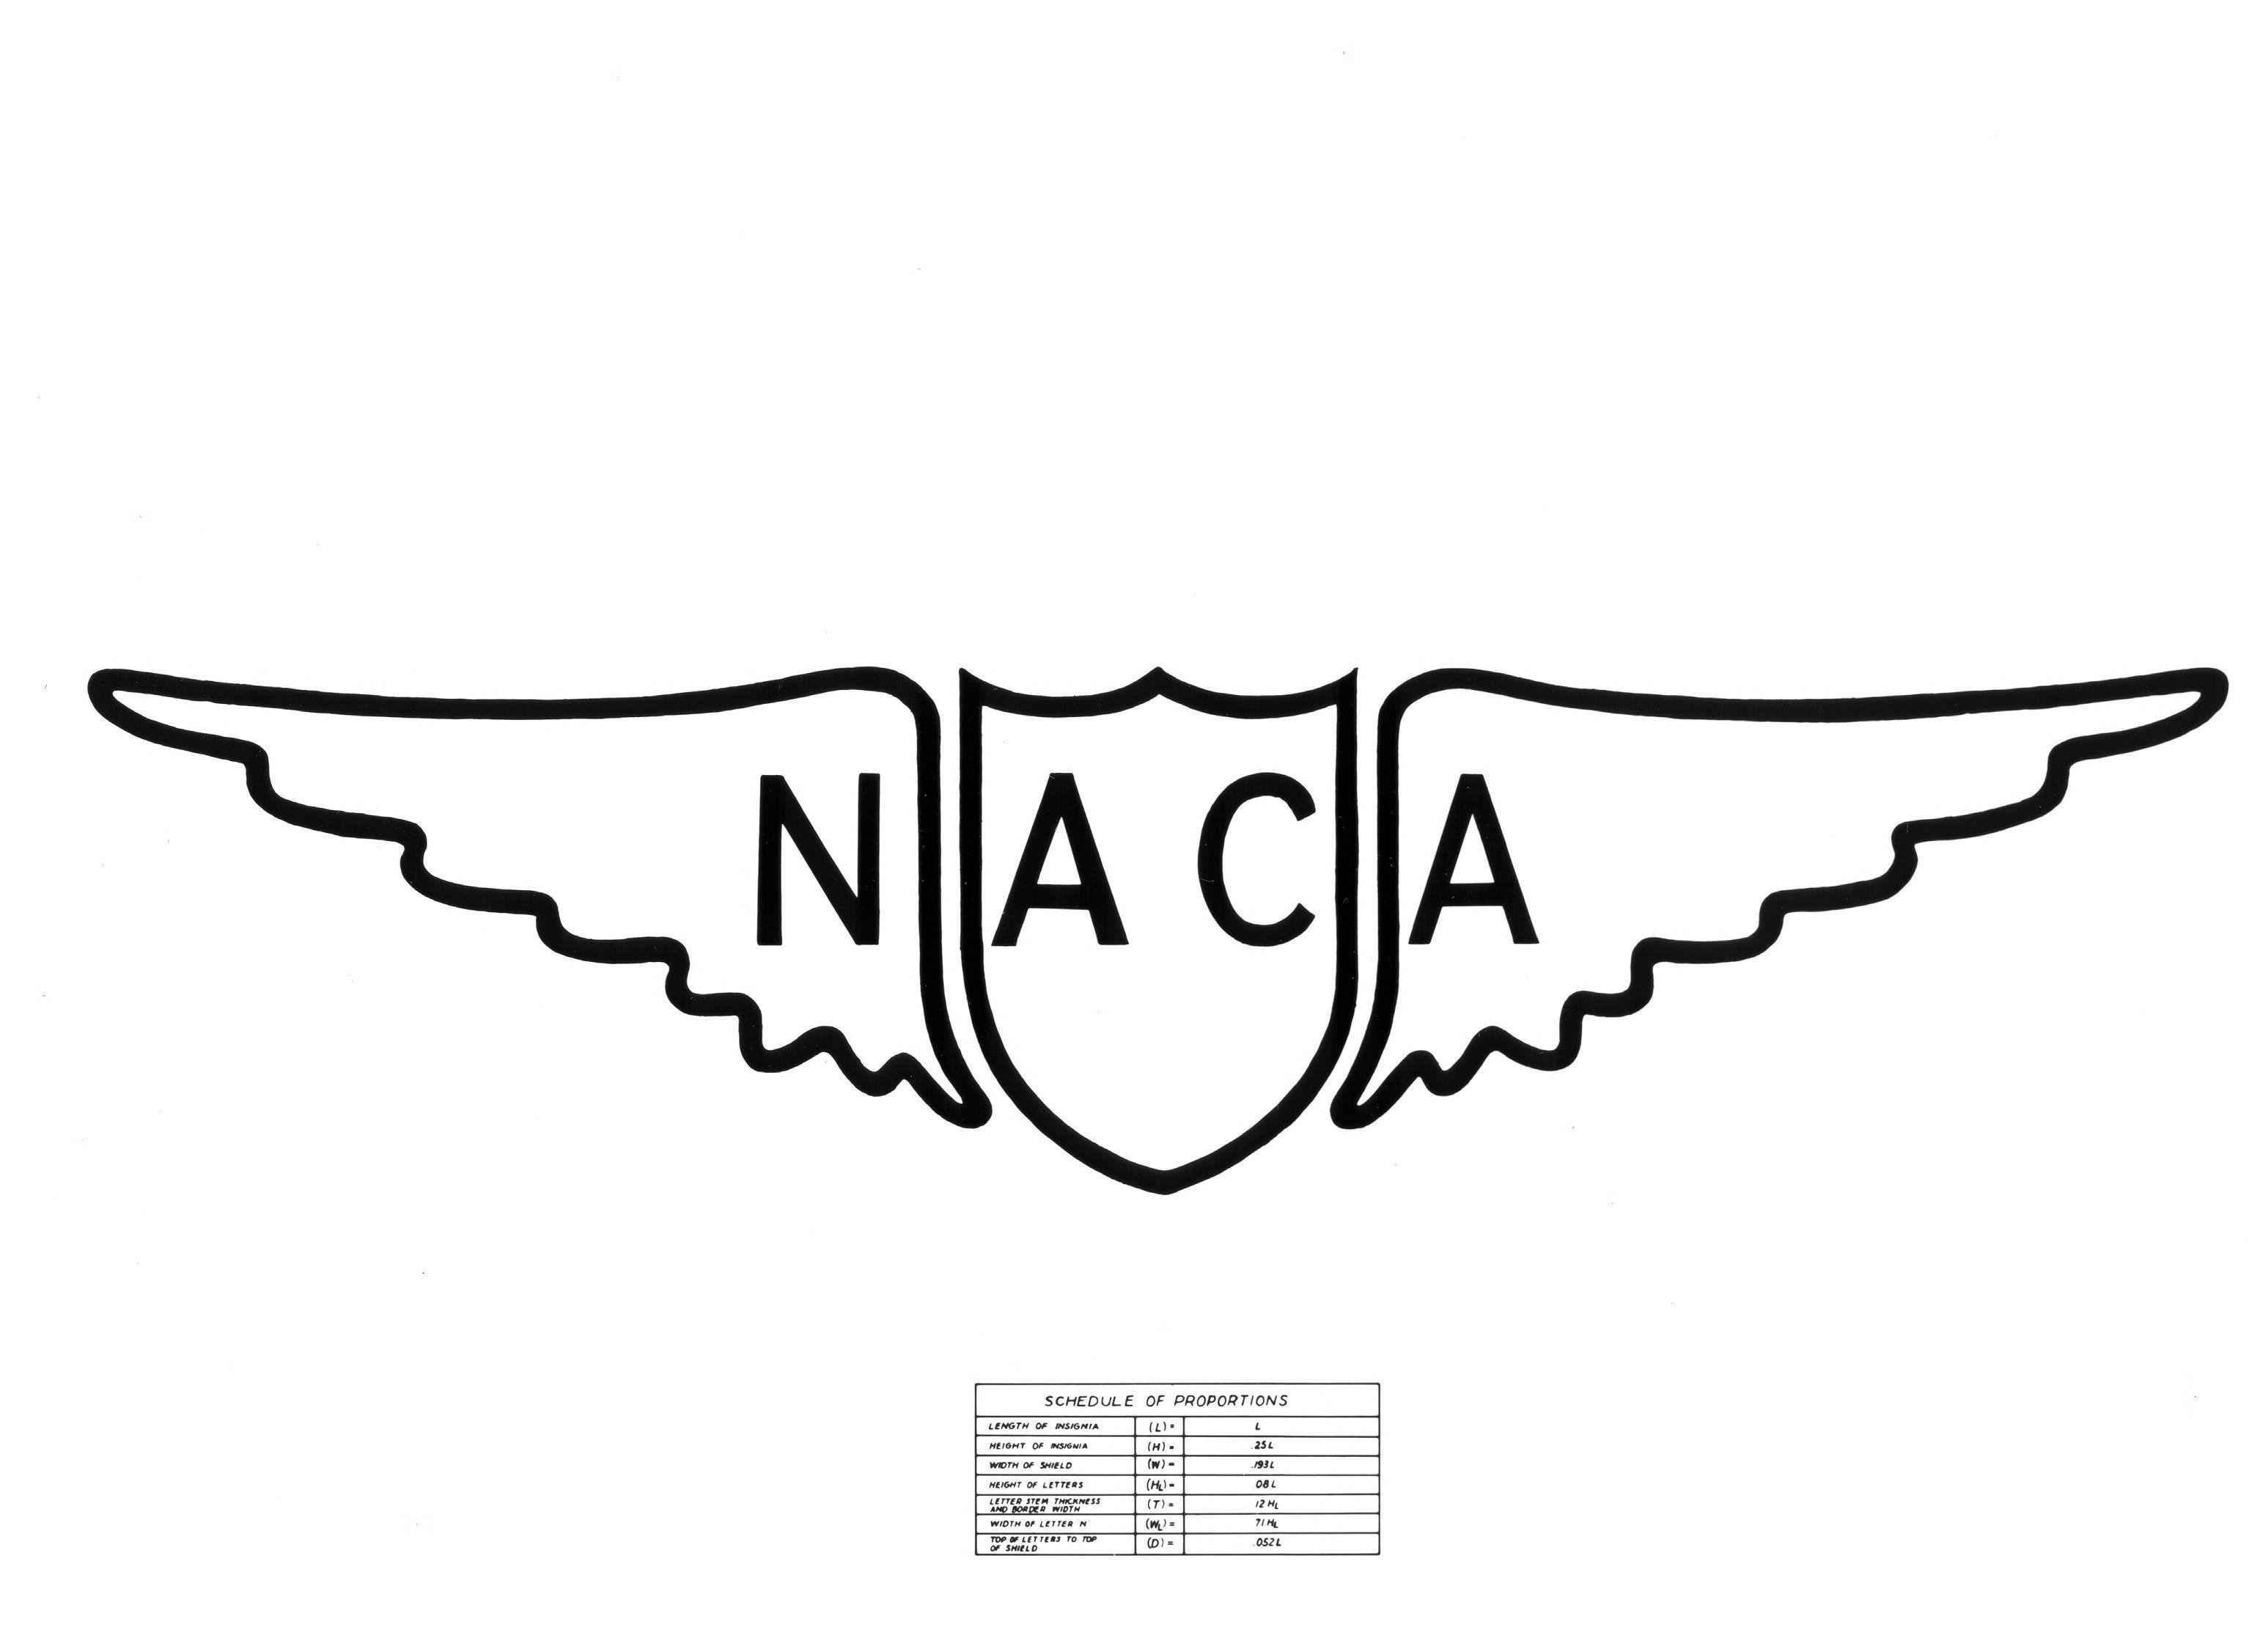 NACA NASA Logo - Insignia Heraldry Of The Space Race